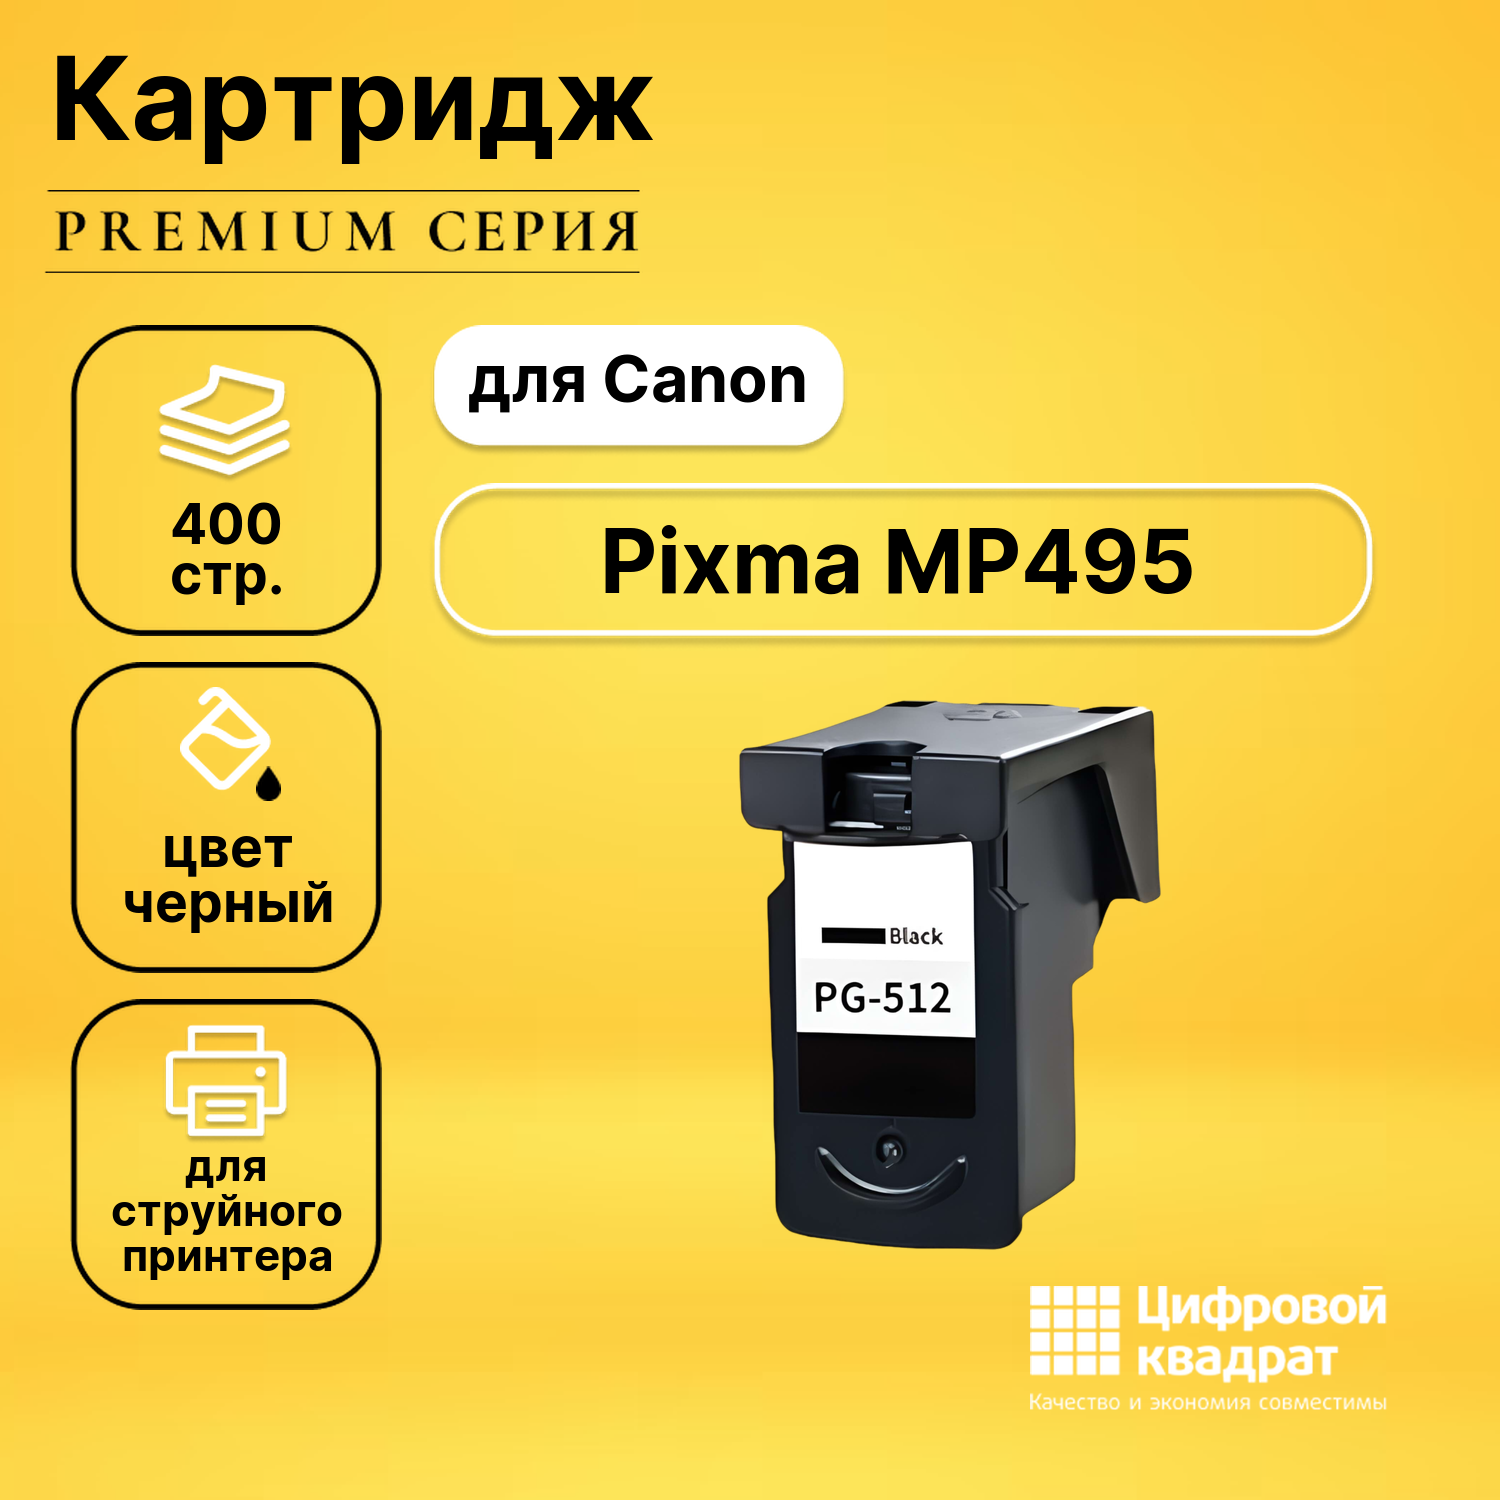 Картридж DS для Canon Pixma MP495 совместимый